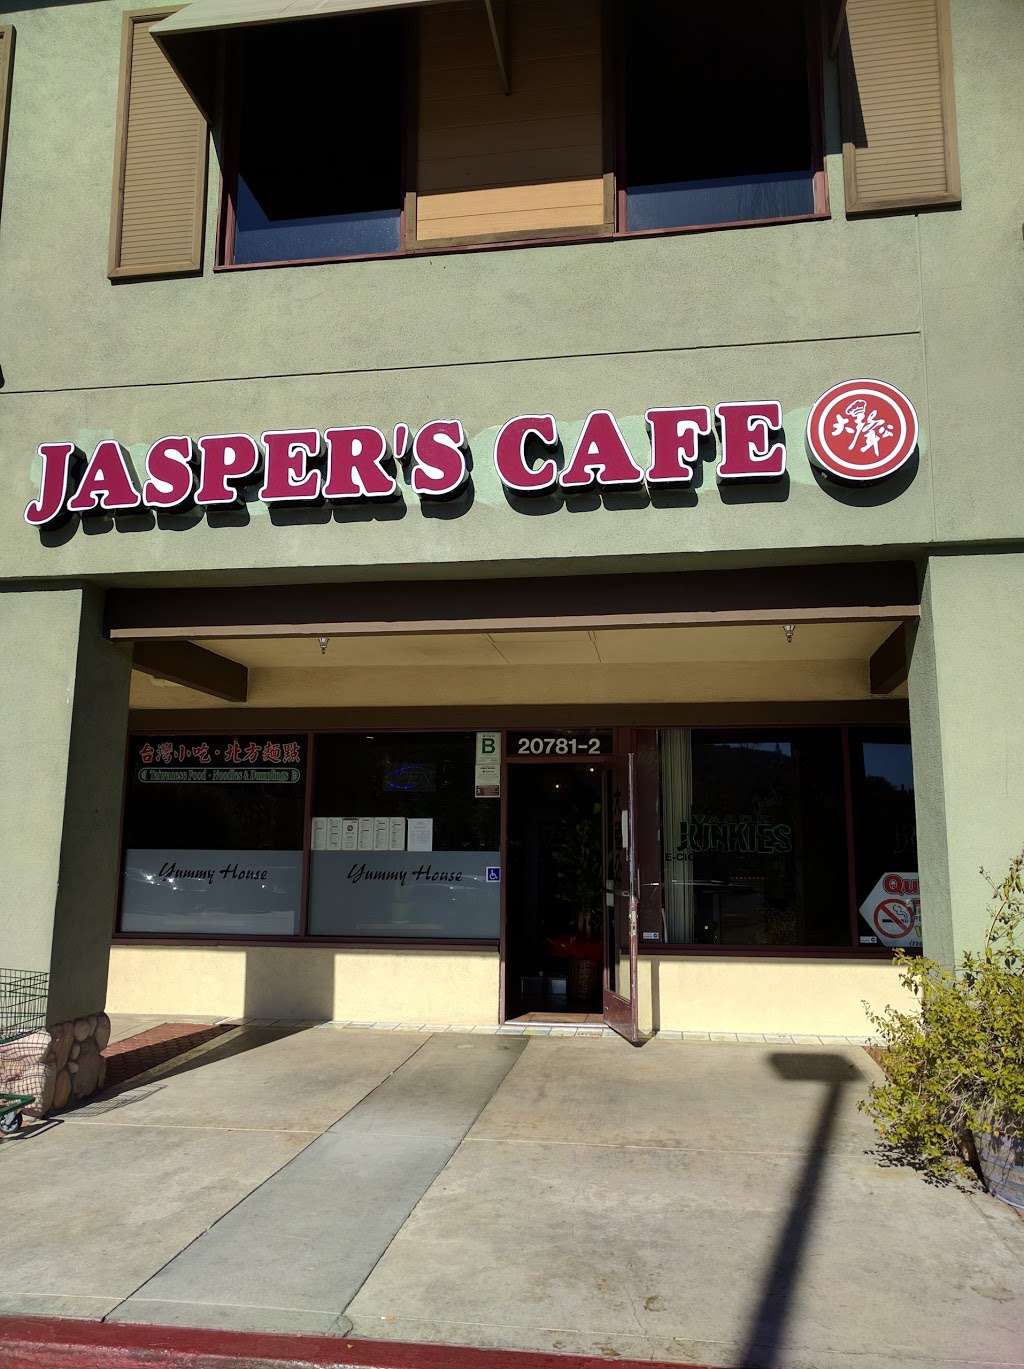 Jaspers Cafe | 5039 20781 Amar Rd, Walnut, CA 91789, USA | Phone: (909) 468-4991